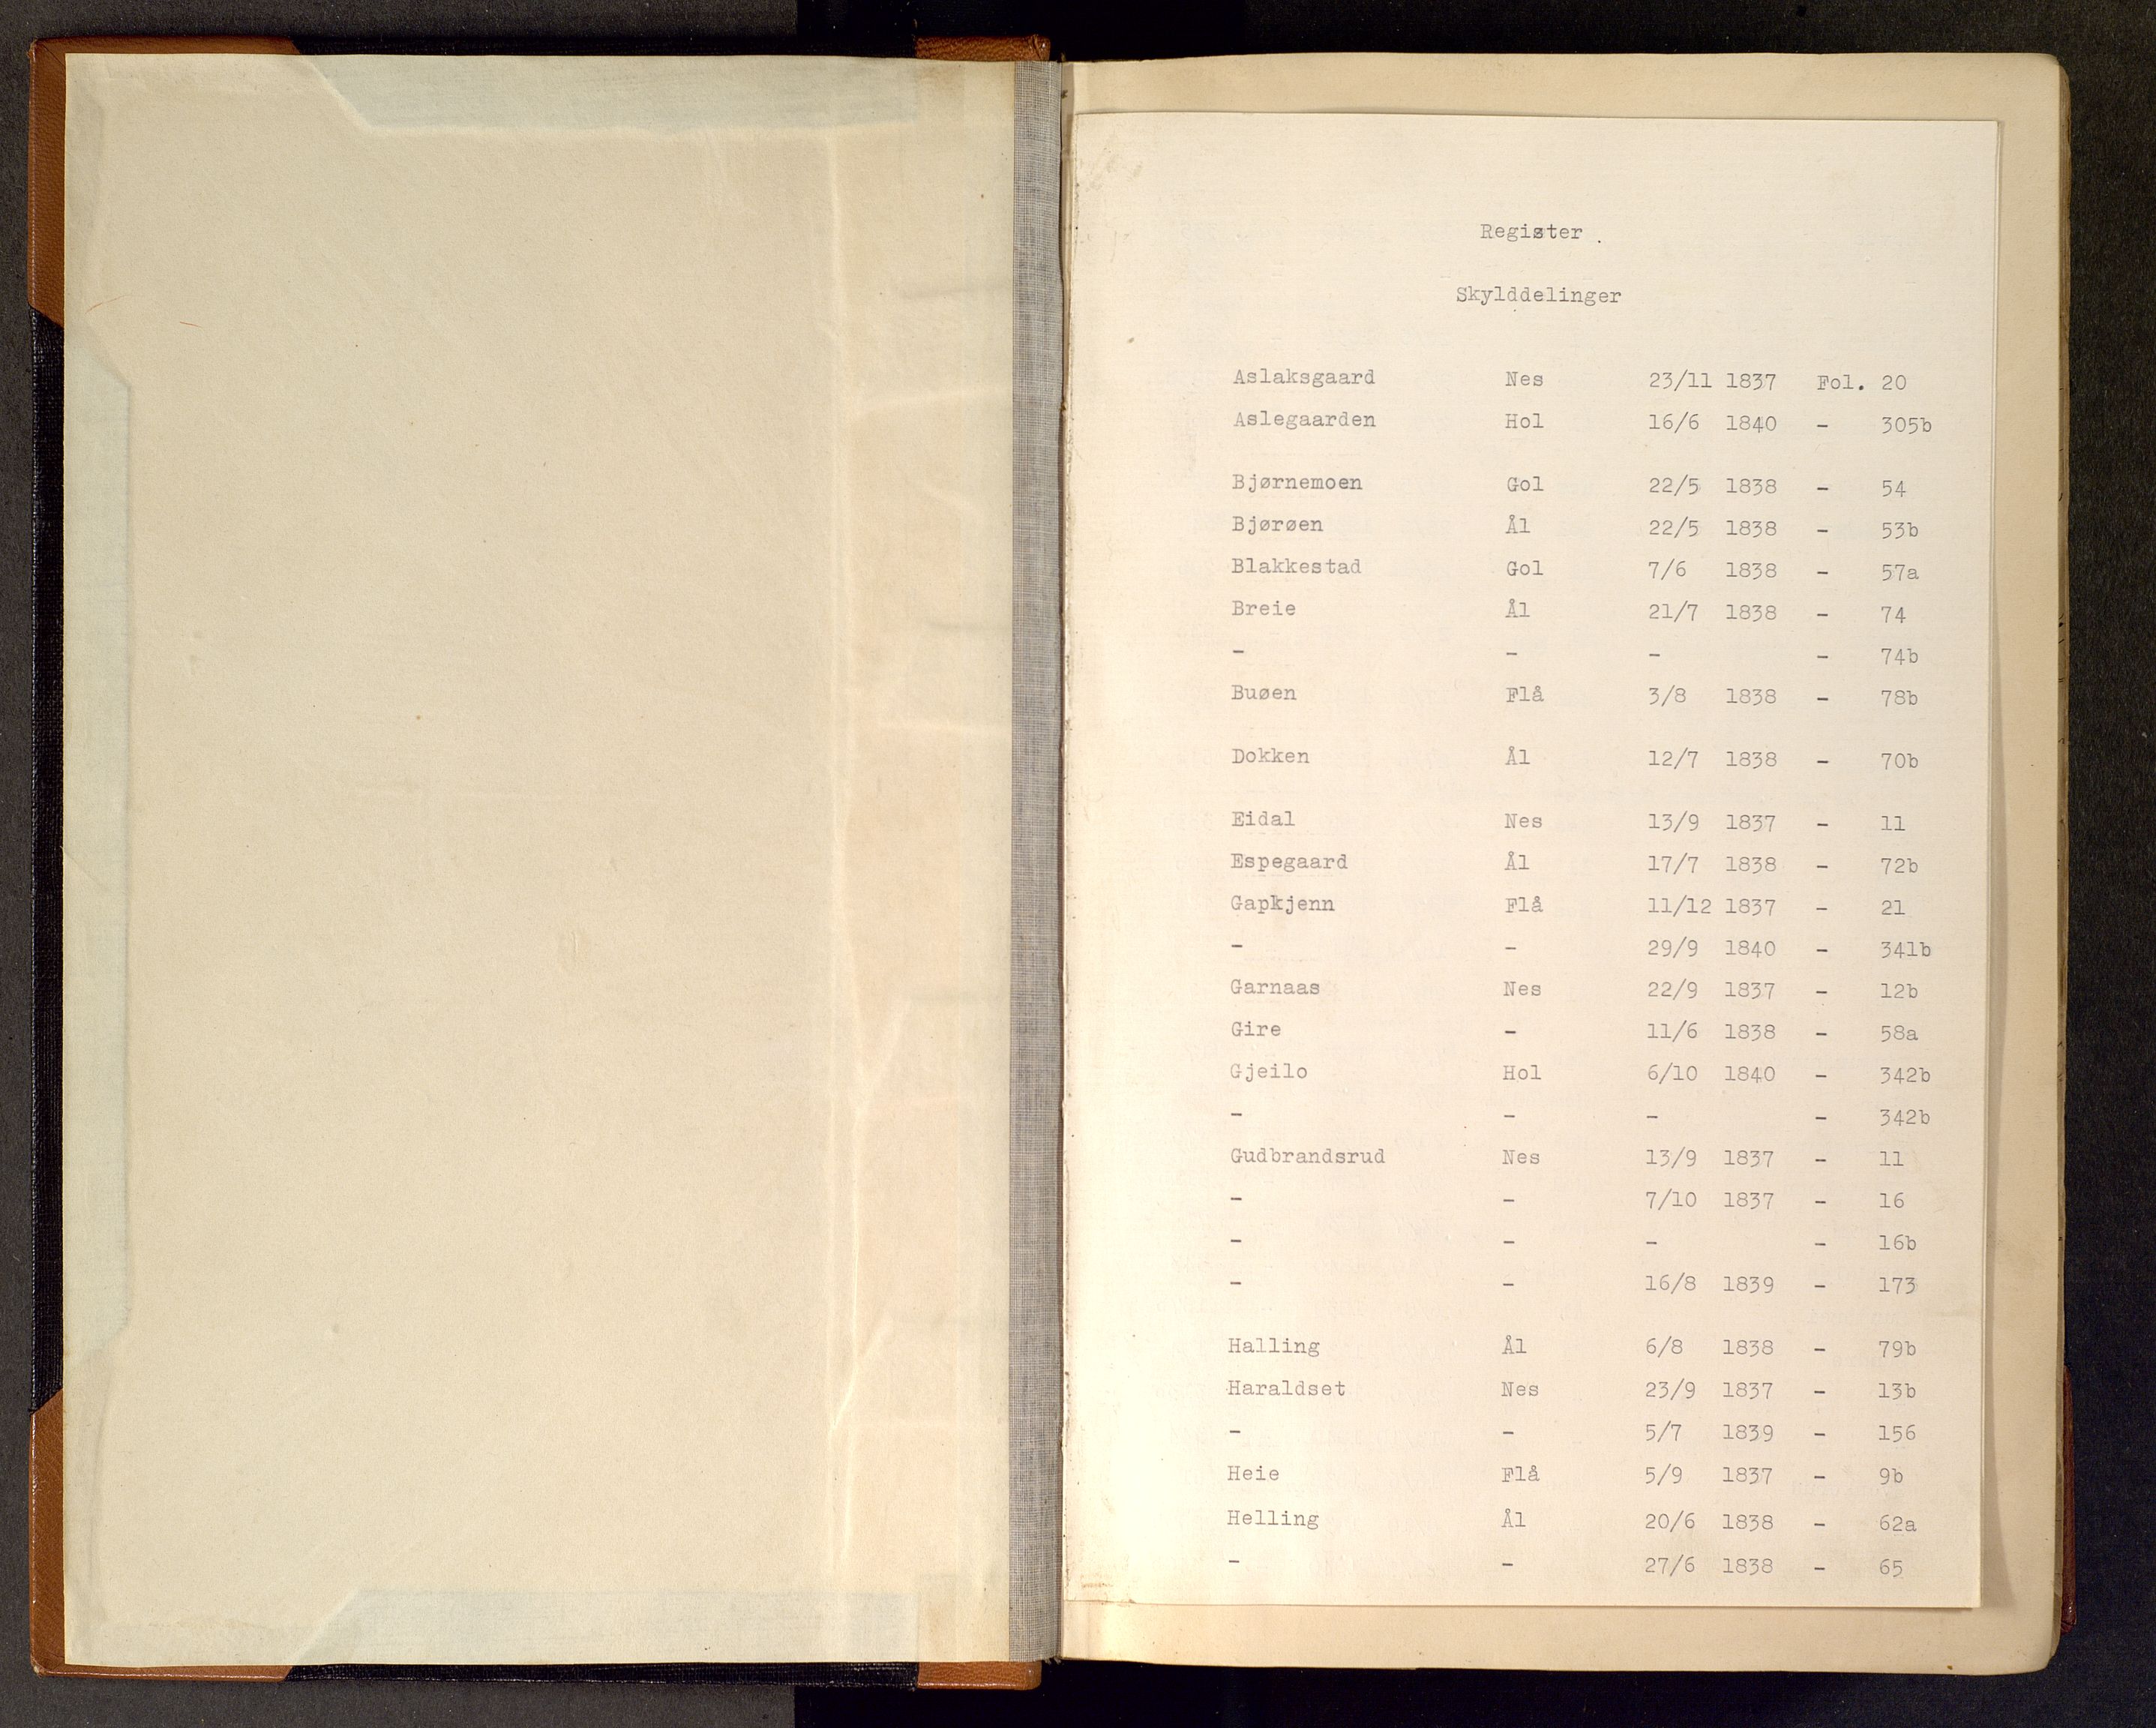 Hallingdal sorenskriveri, SAKO/A-121/F/Fc/L0003: Ekstrarettsprotokoll, 1837-1841